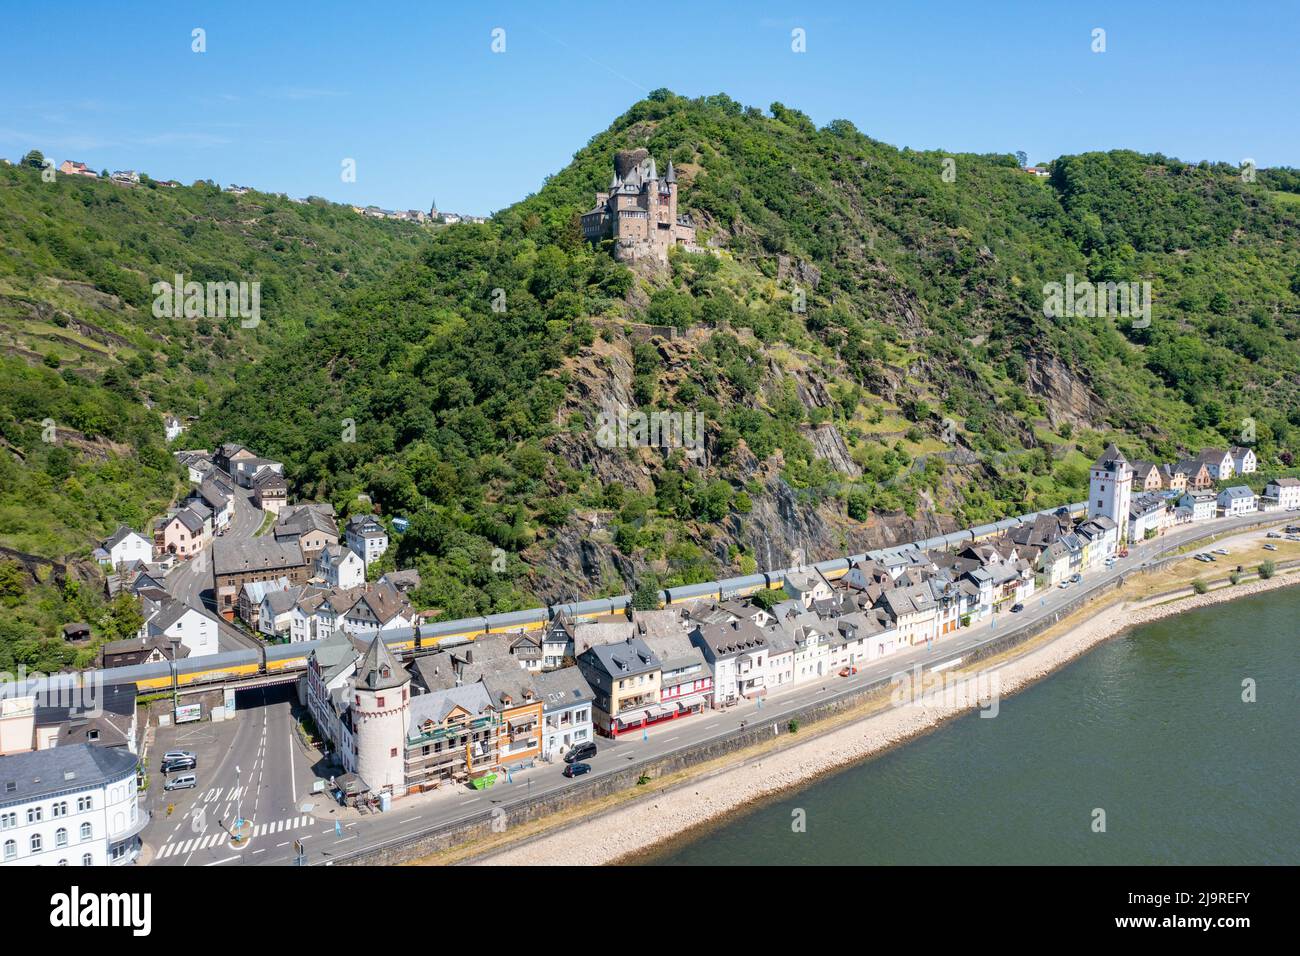 Rheinfels Castle or Burg Rheinfels, Sankt Goar, Rhine Valley, Germany Stock Photo